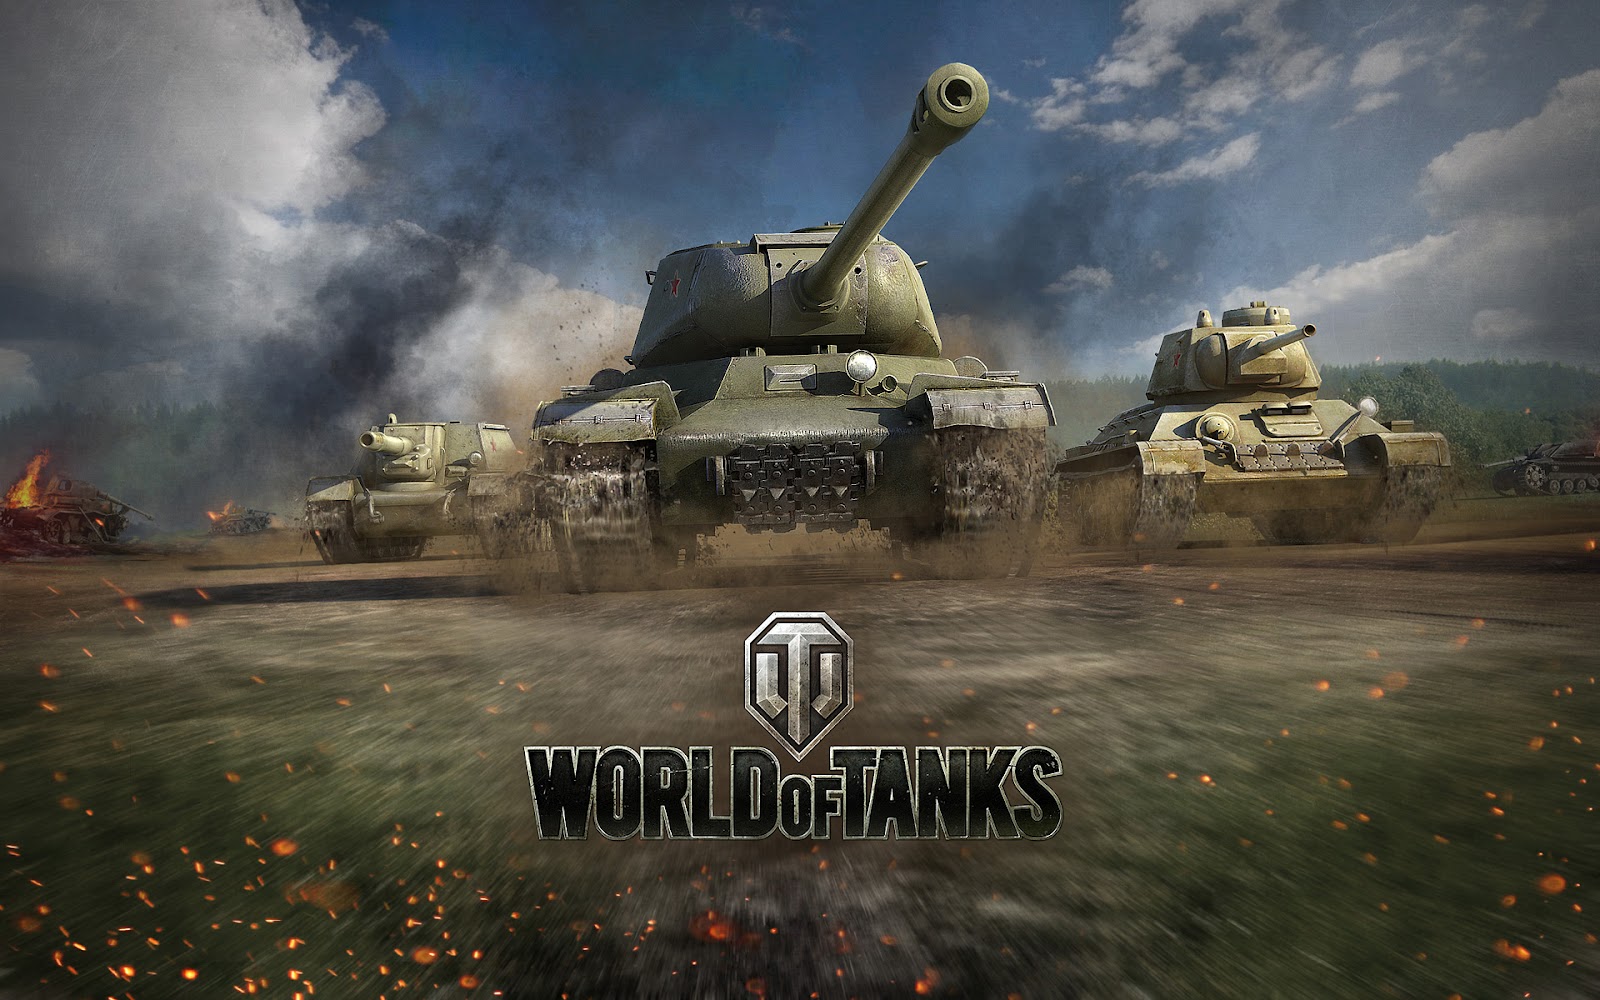 world of tanks game wallpaper met tanks in de aanval hd word of tanks